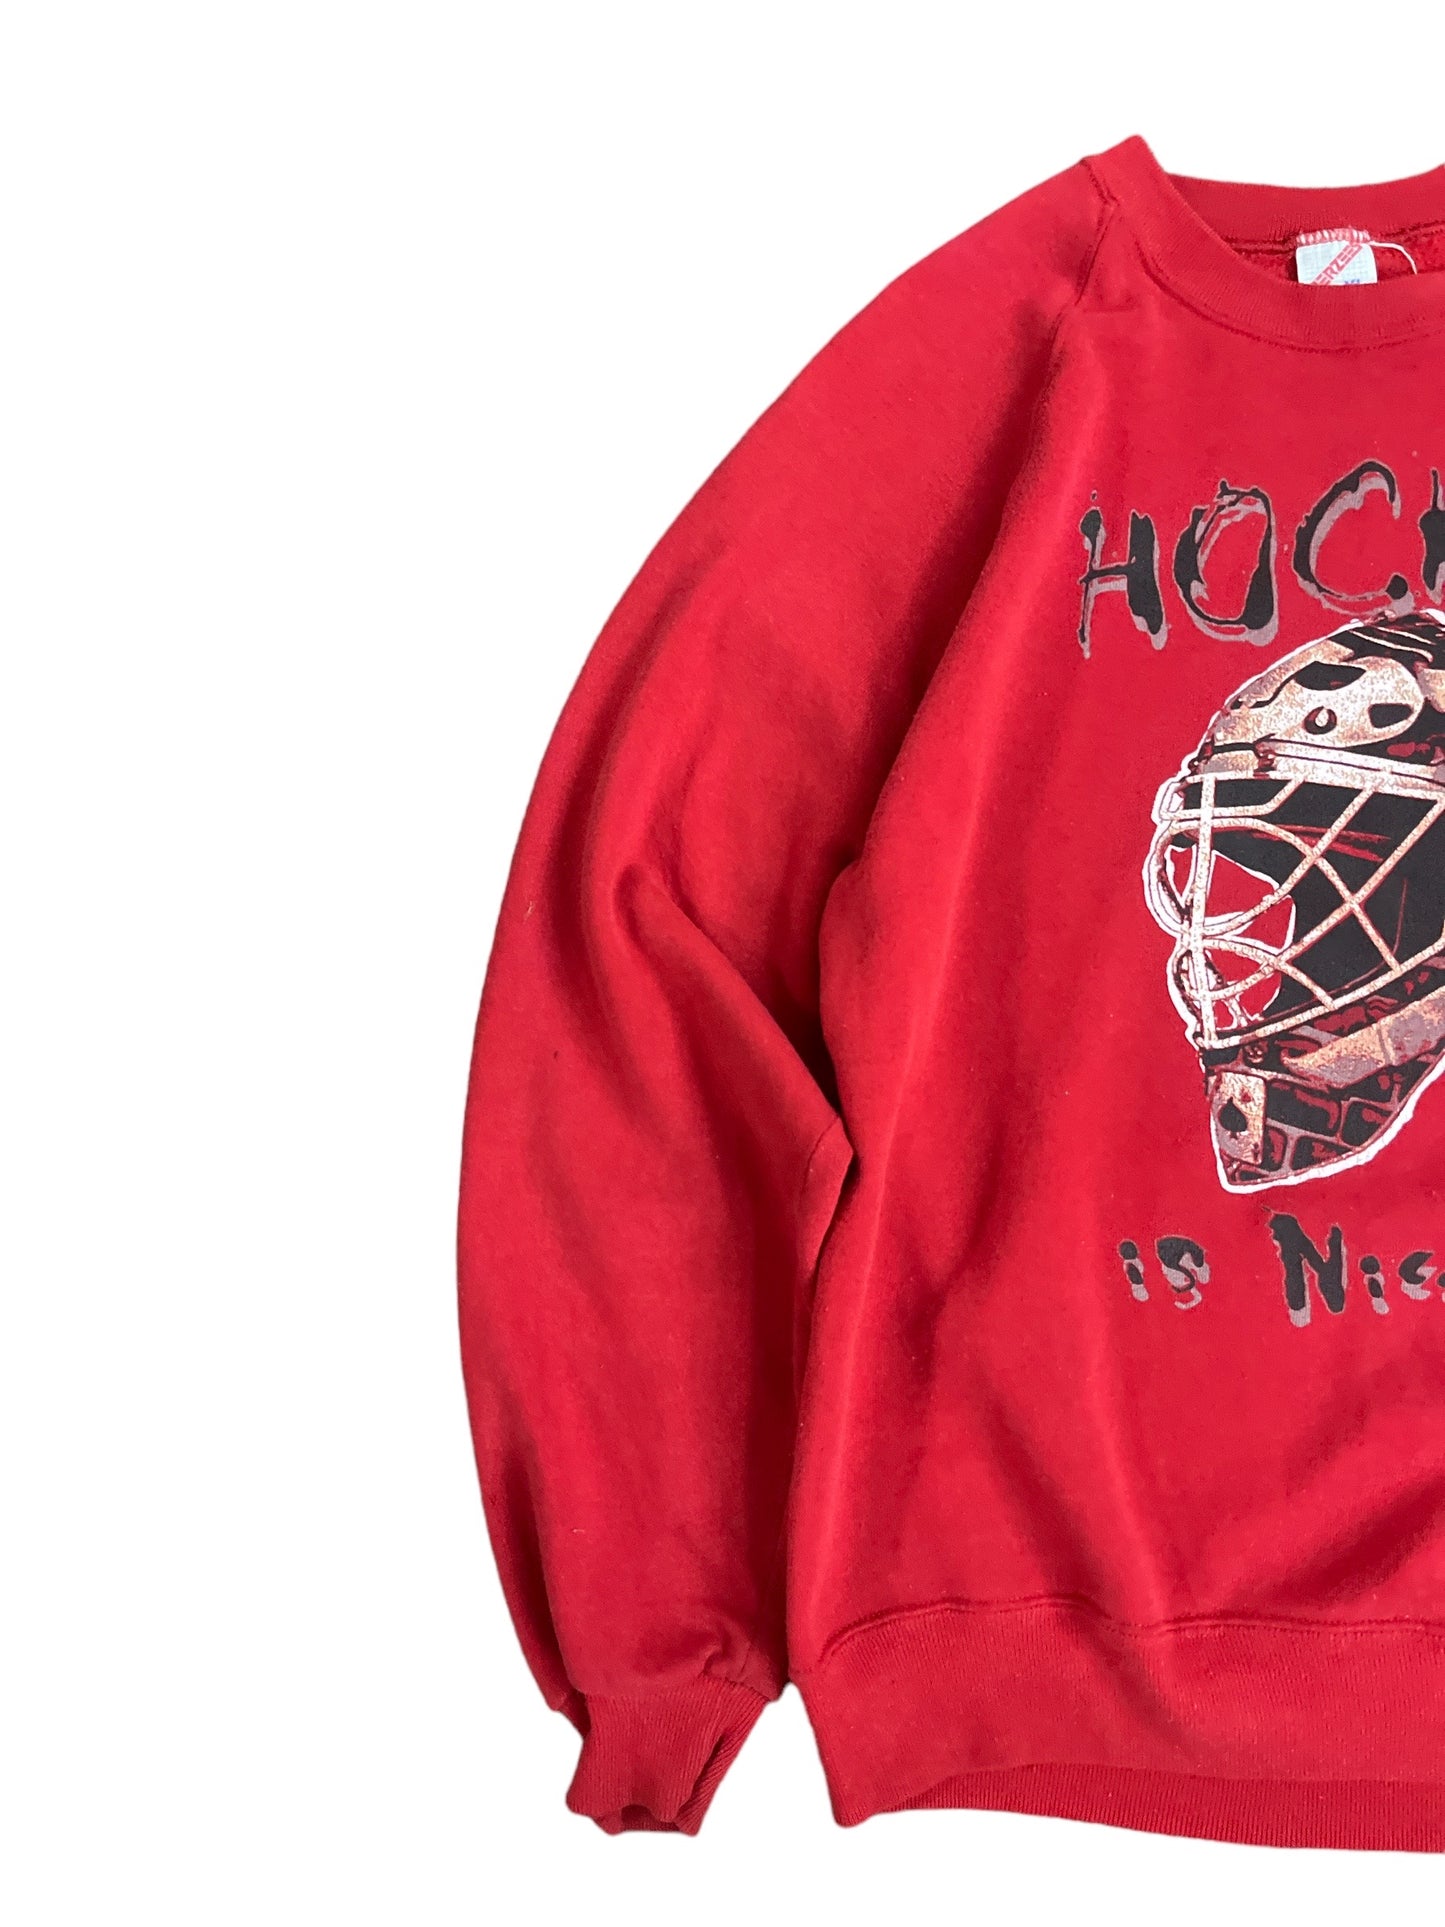 Vintage Heavyweight "Hockey Is Nice" Sweater